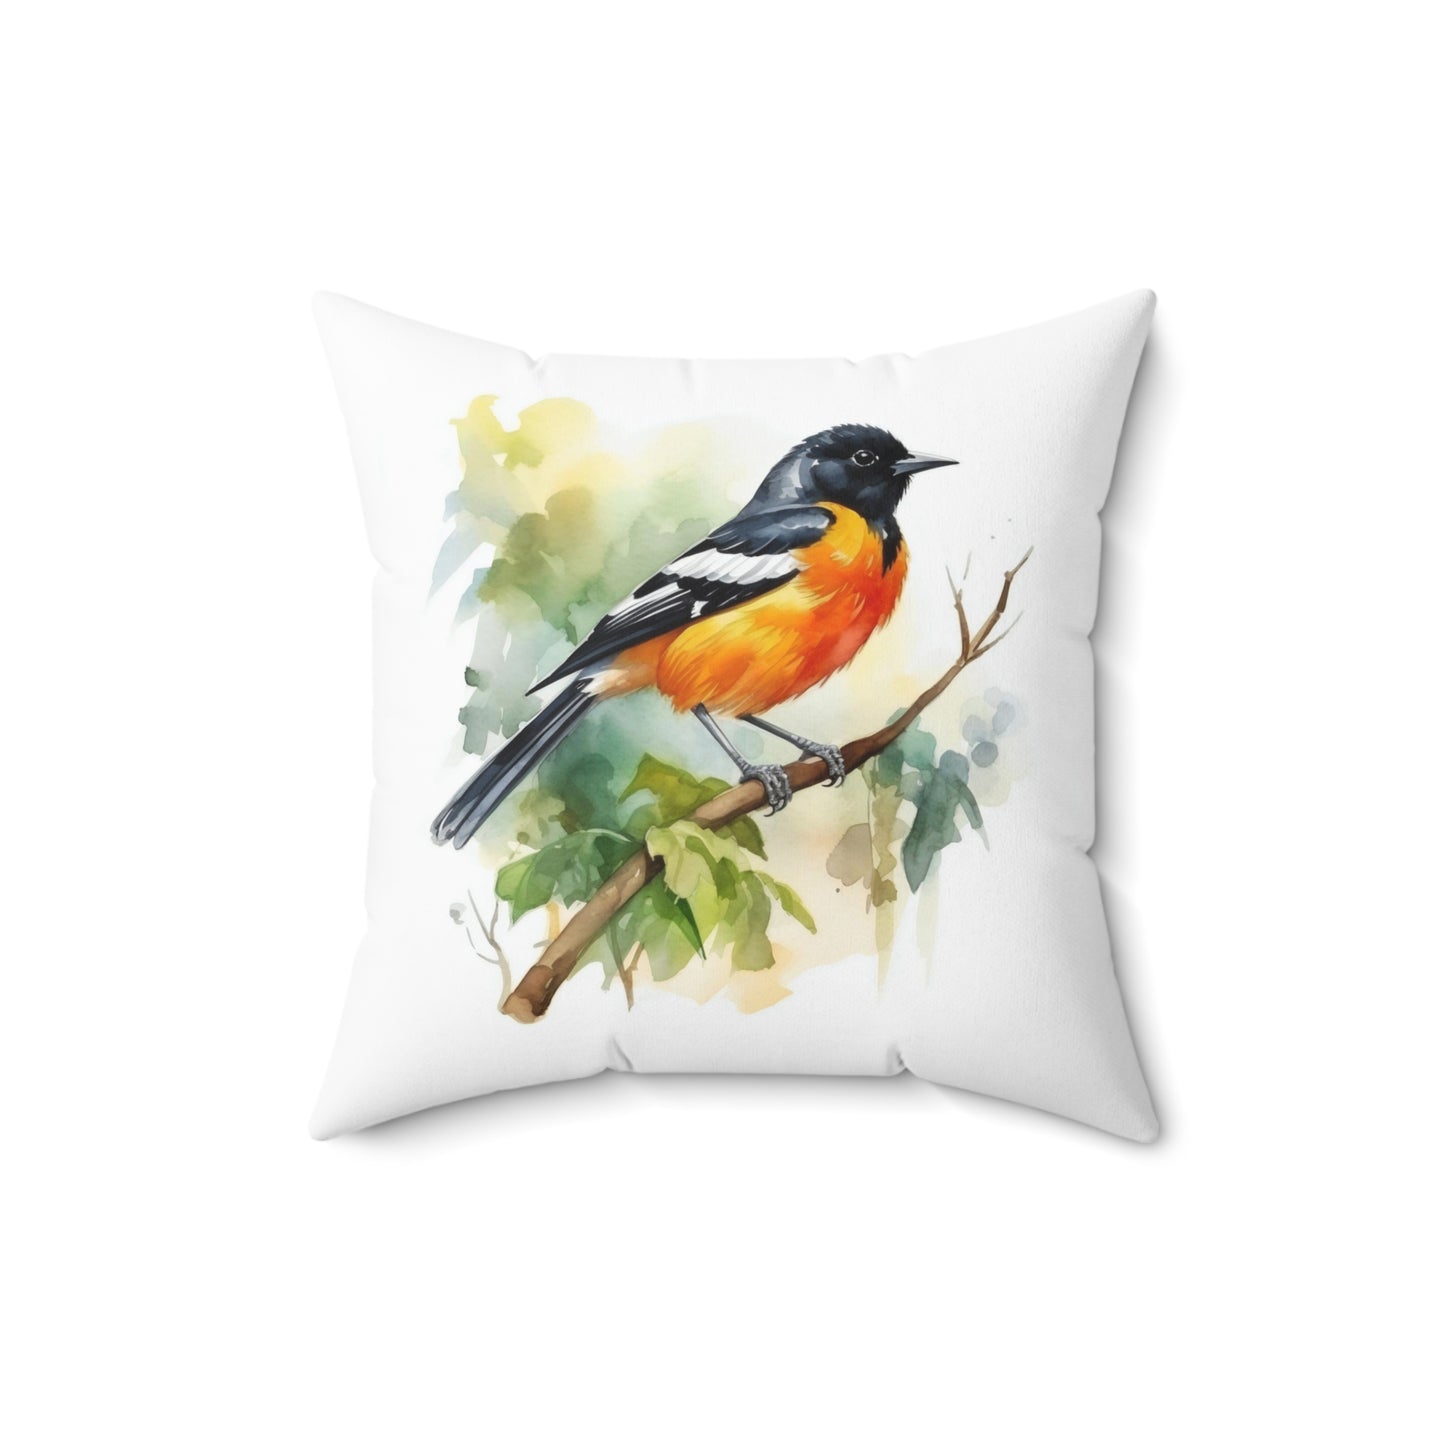 Oriole Pillow, Watercolor Oriole Decorative Pillow, Oriole Accent Pillow, Square Bird Cushion, Bird Pillow, Nature Pillow, Concealed Zipper